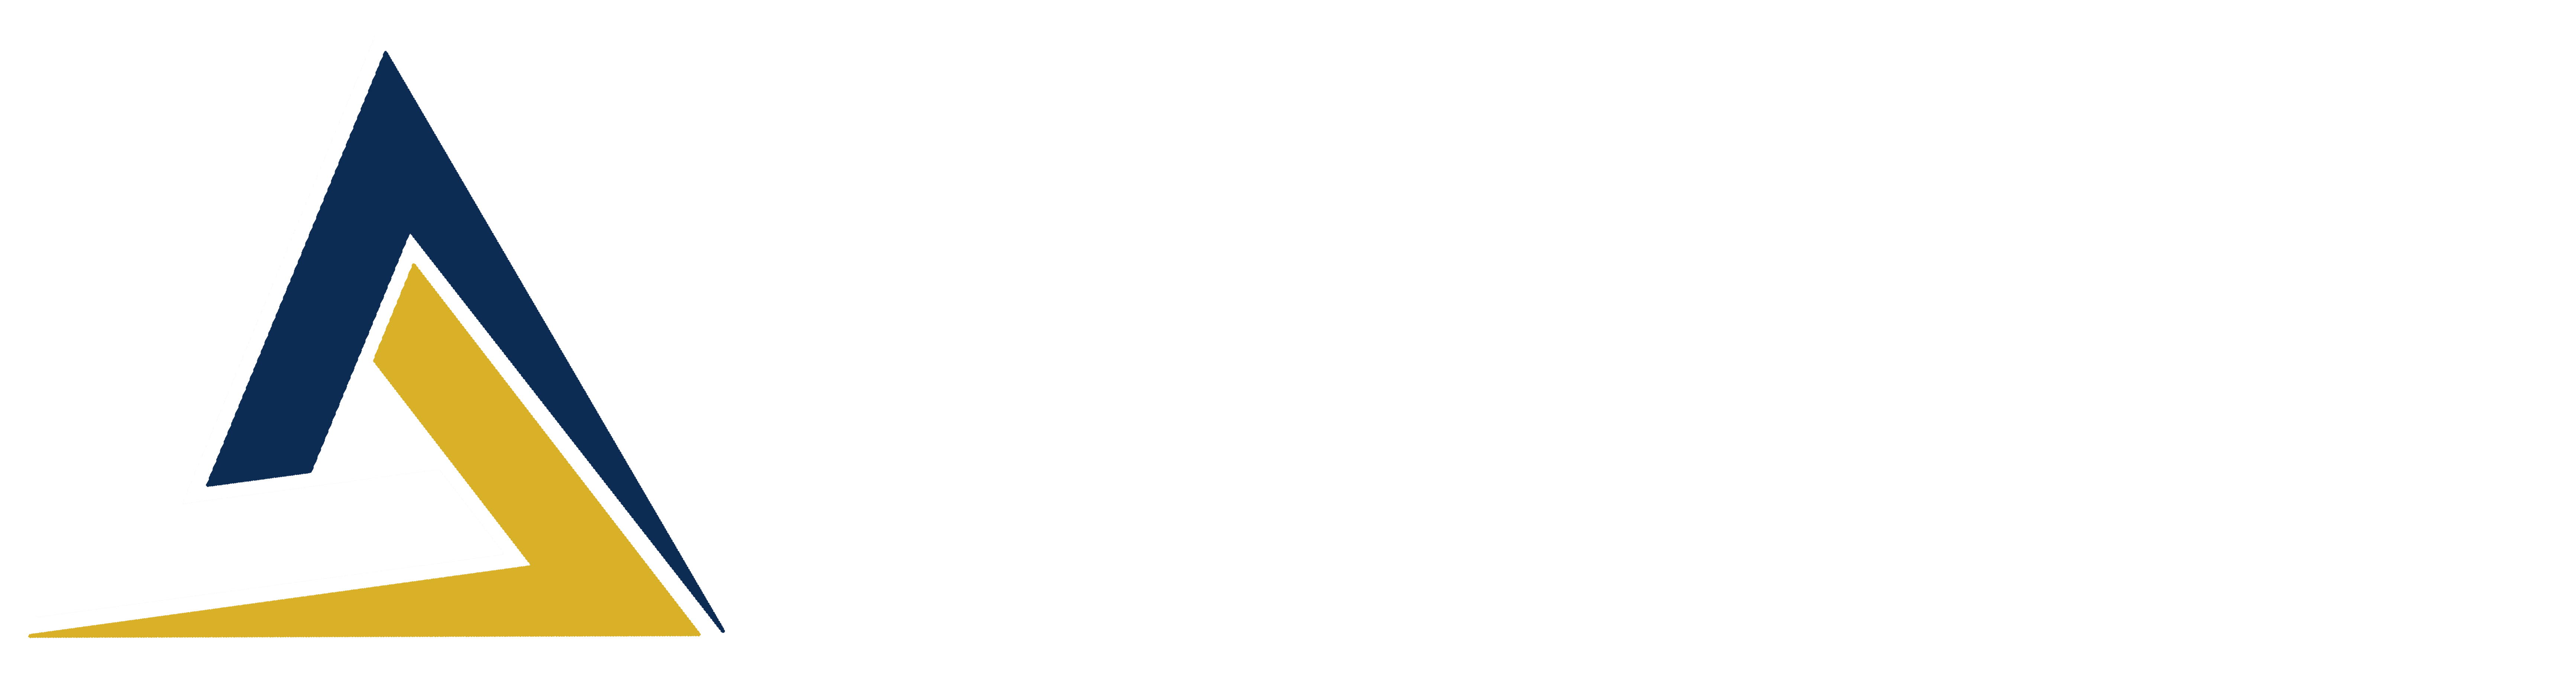 bakersfield academy logo